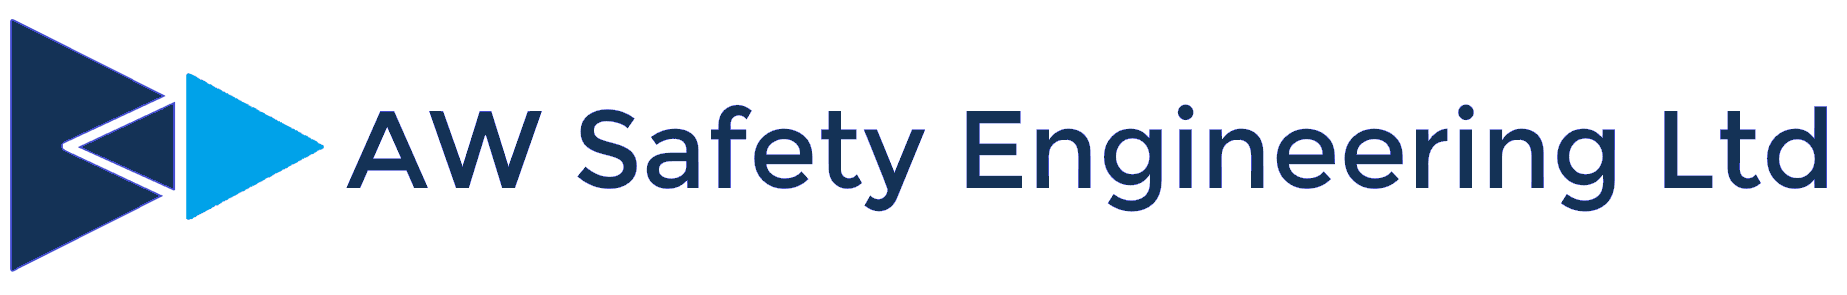 AW Safety Engineering Ltd